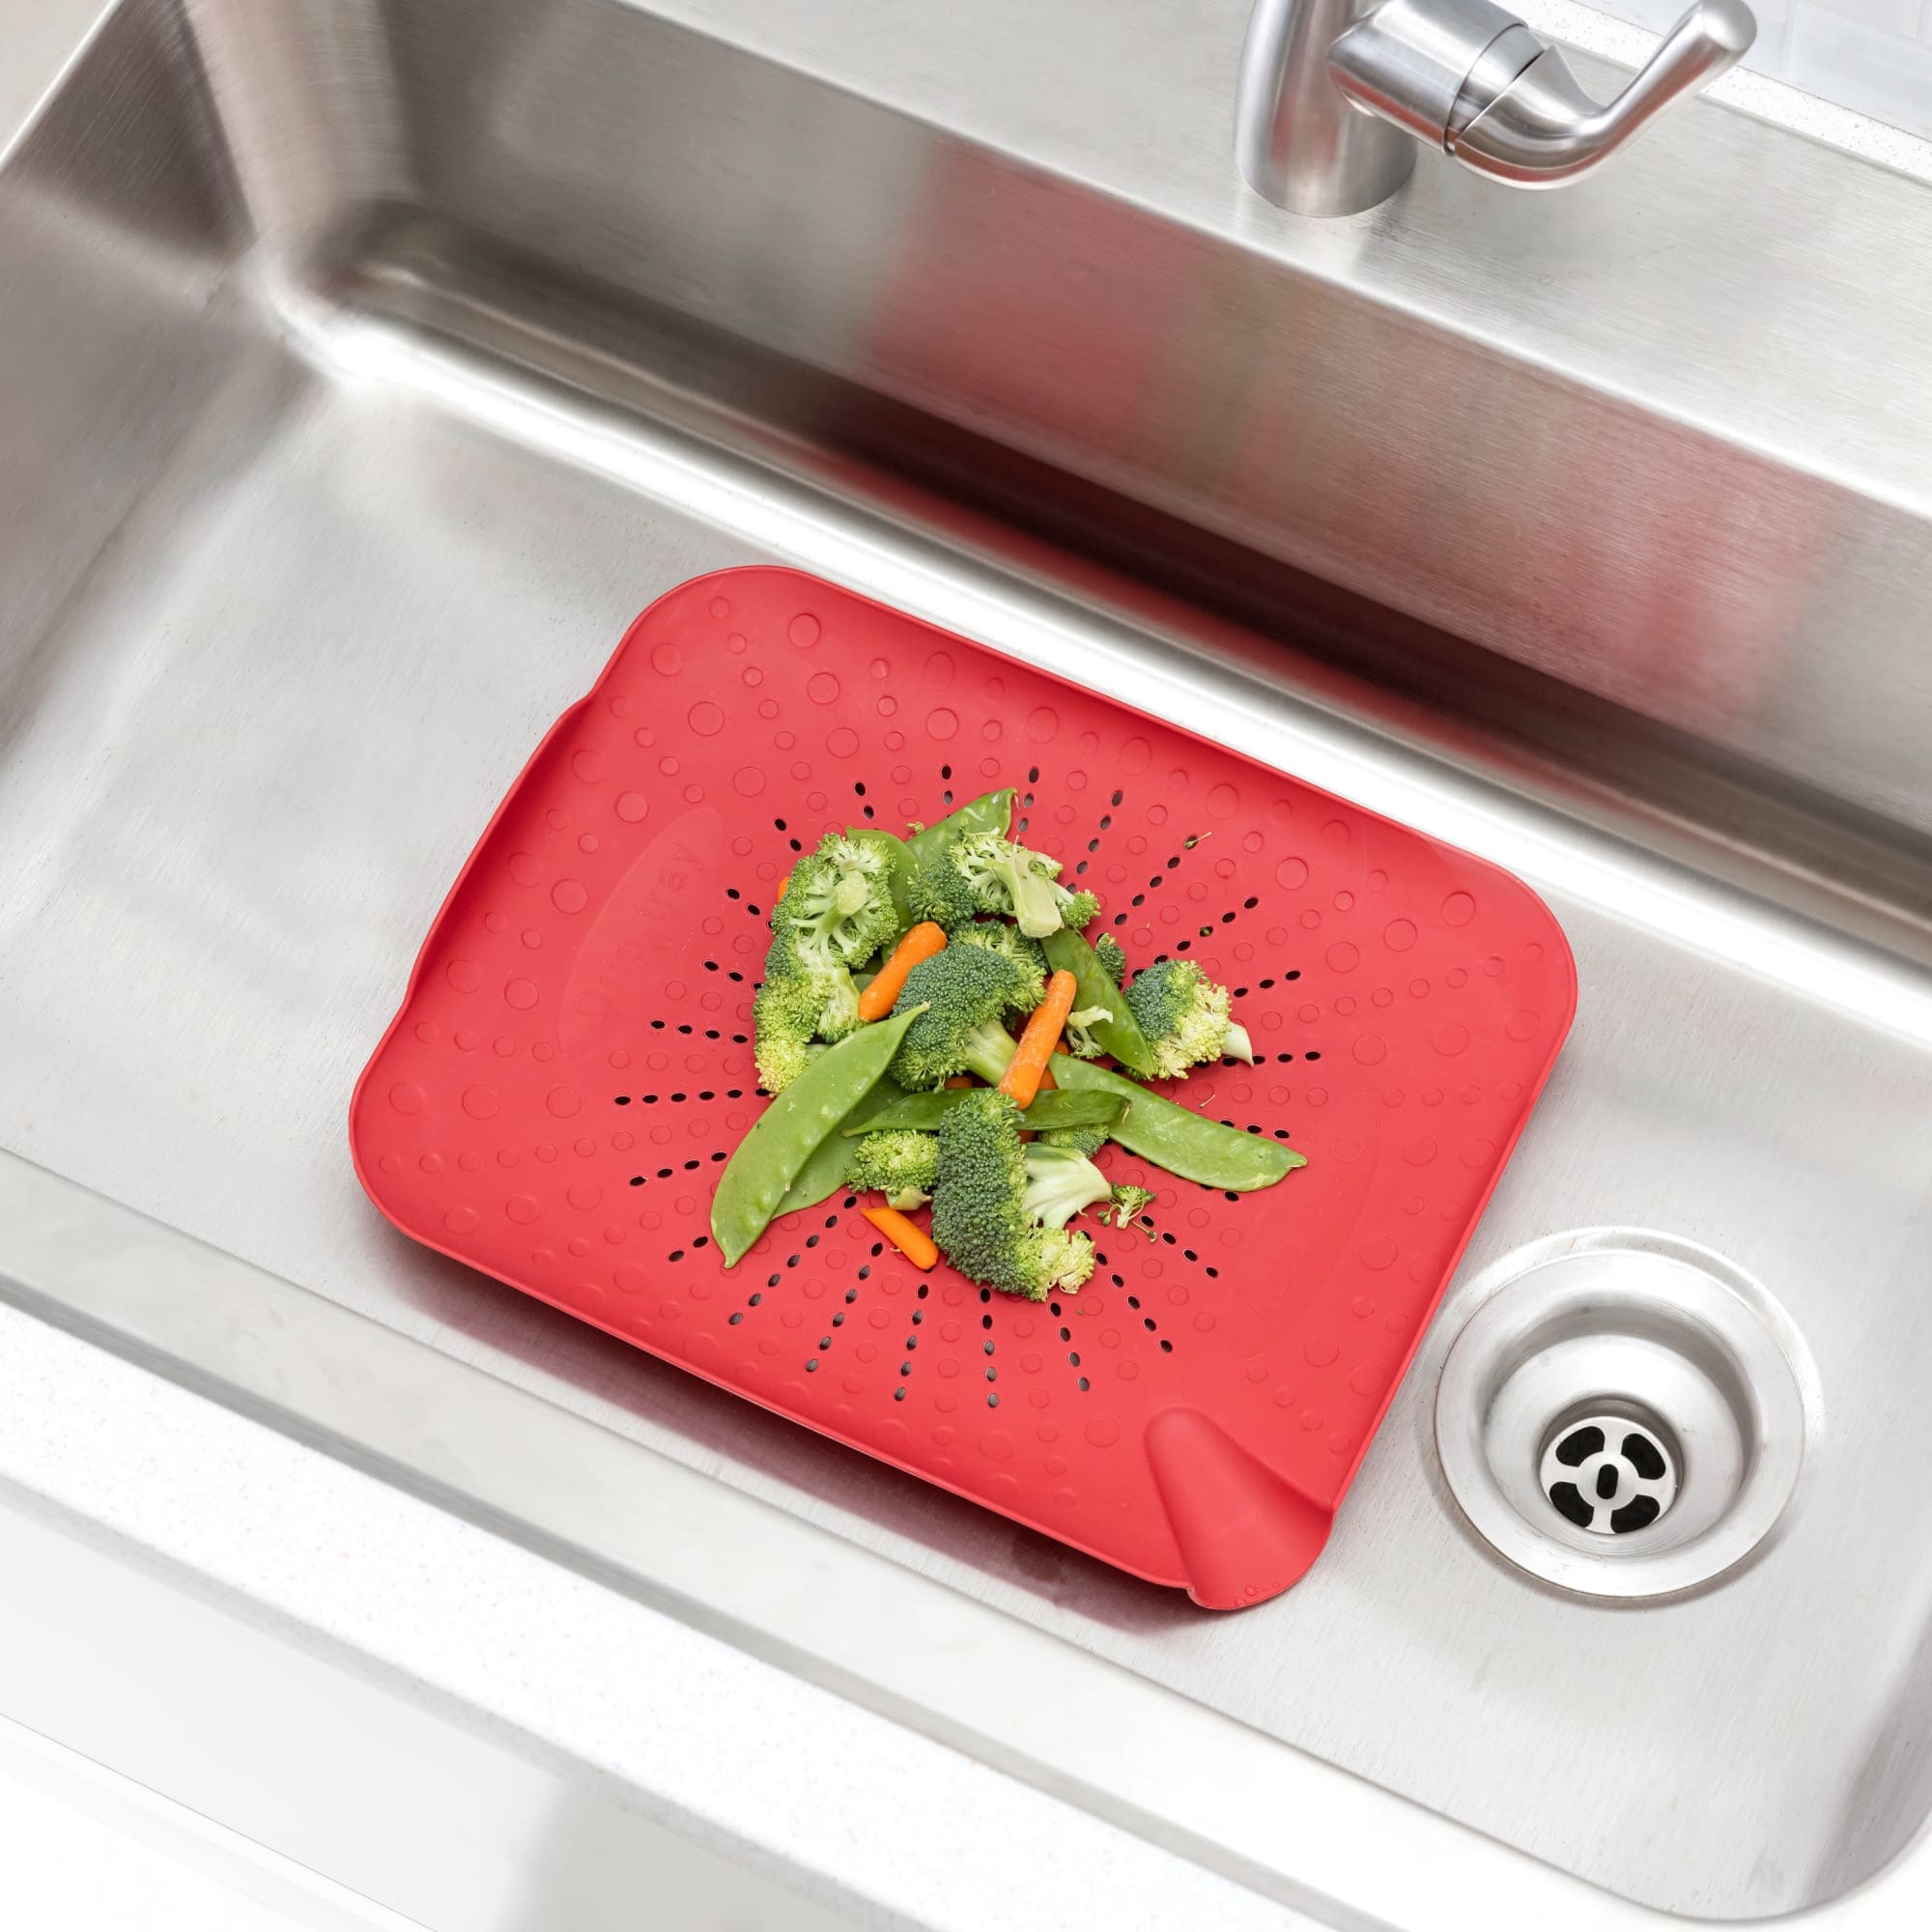 Home Basics Flat Sink Colander Food Prepping Strainer Board, Red $2.50 EACH, CASE PACK OF 24